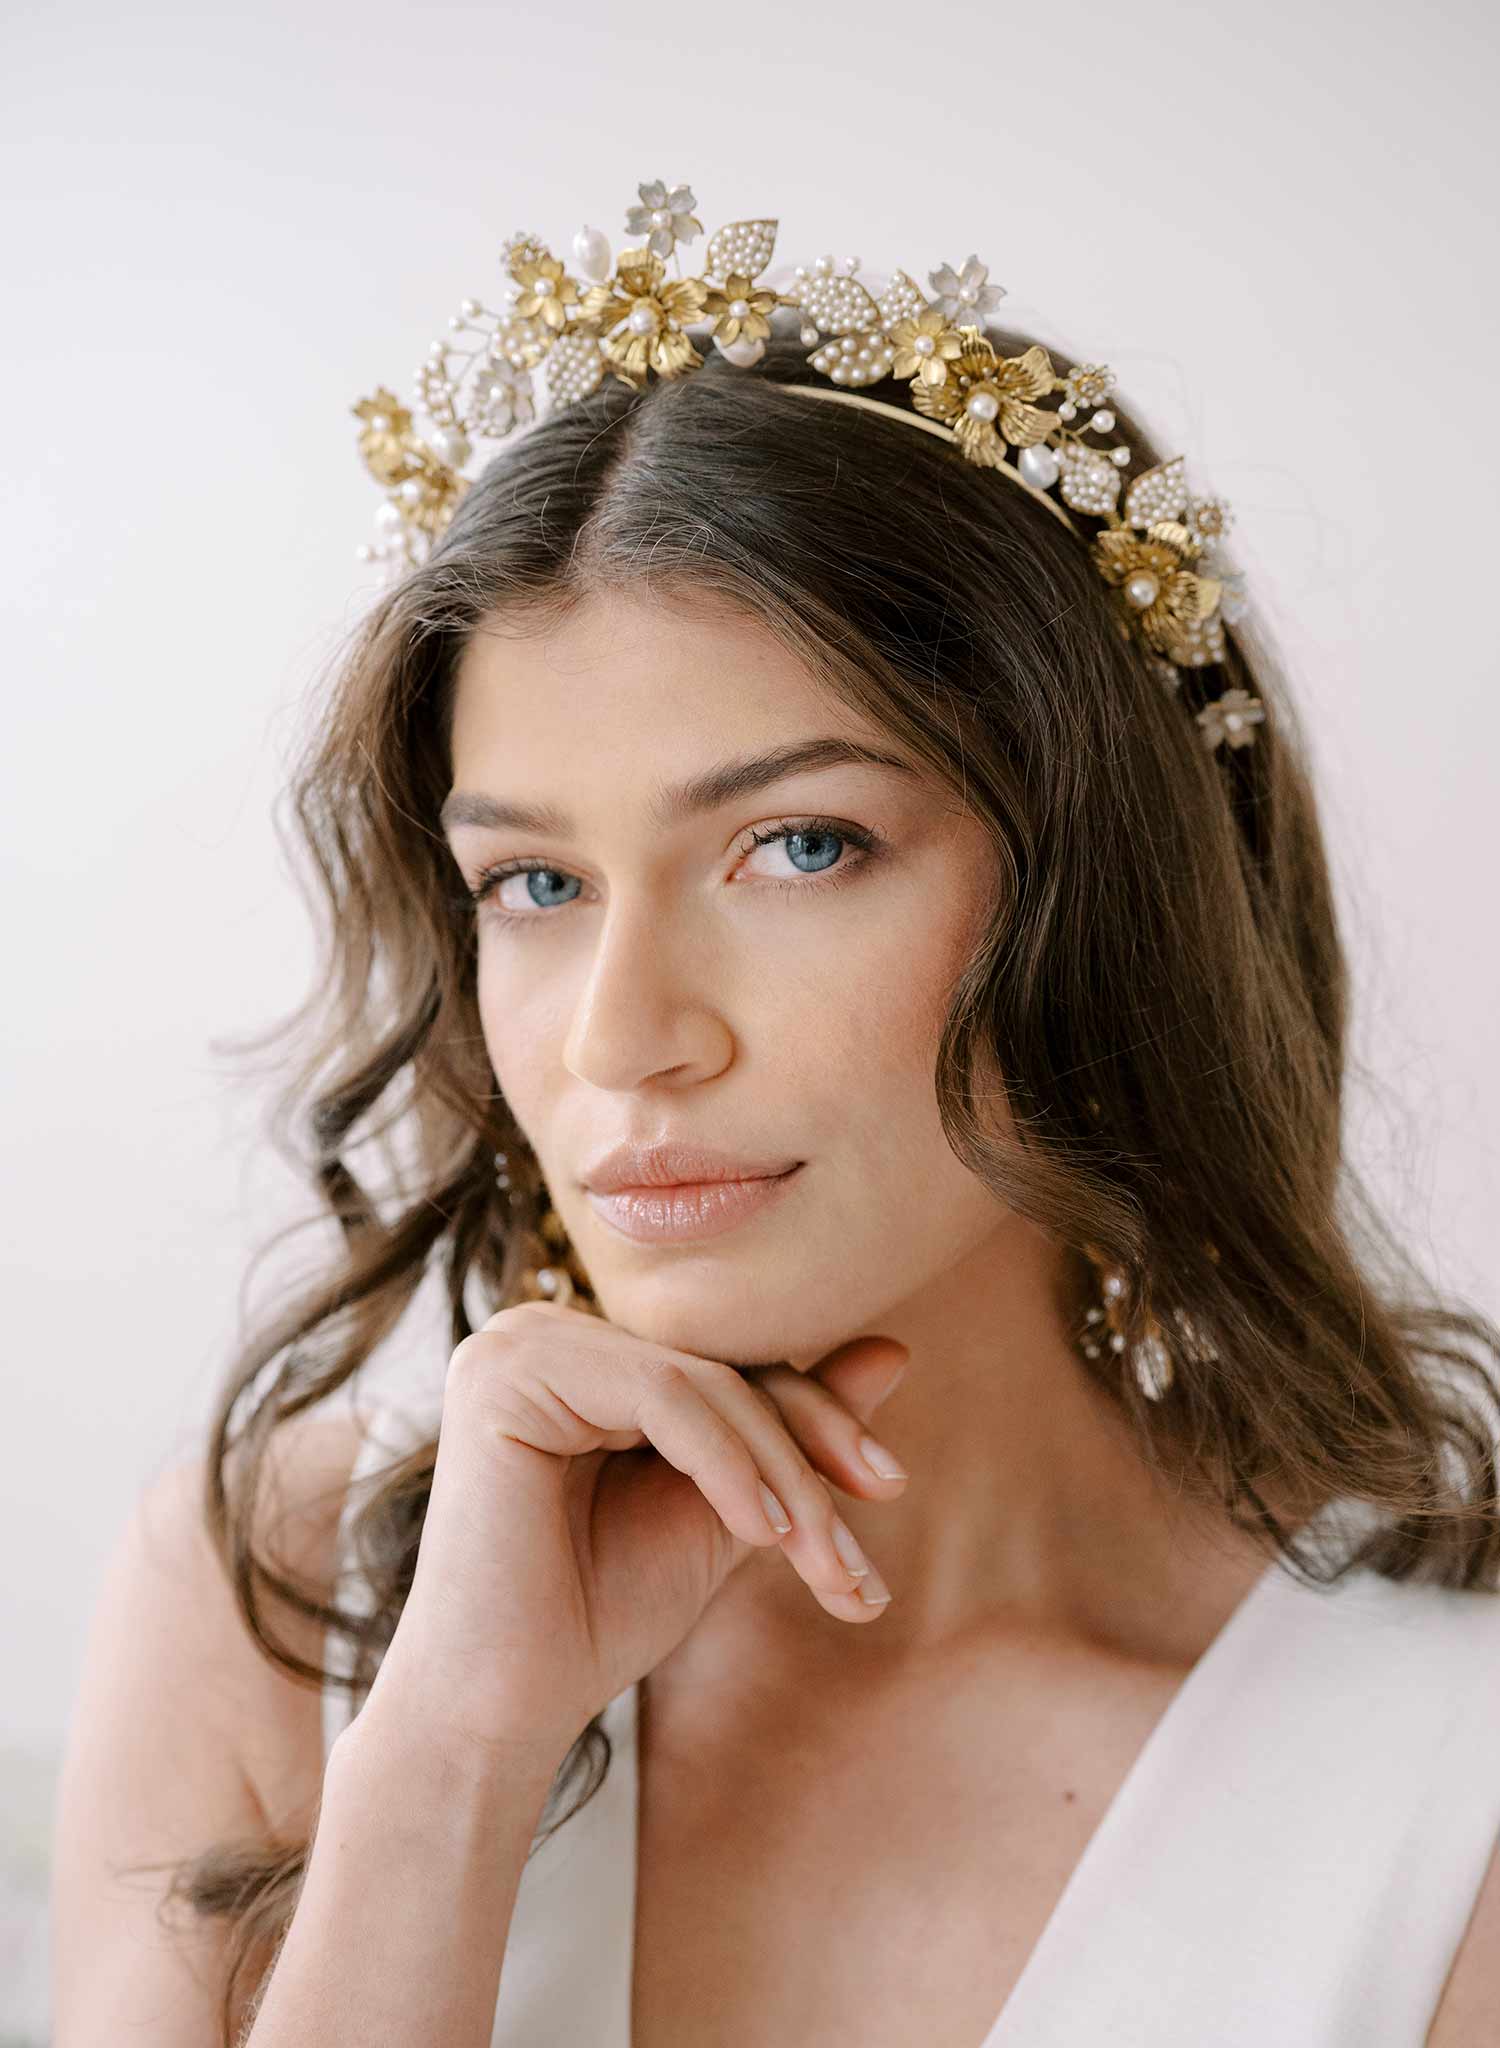 Bridal flower crown - Flourishing garden raised tiara - Style #2326 | Twigs & Honey ®, LLC